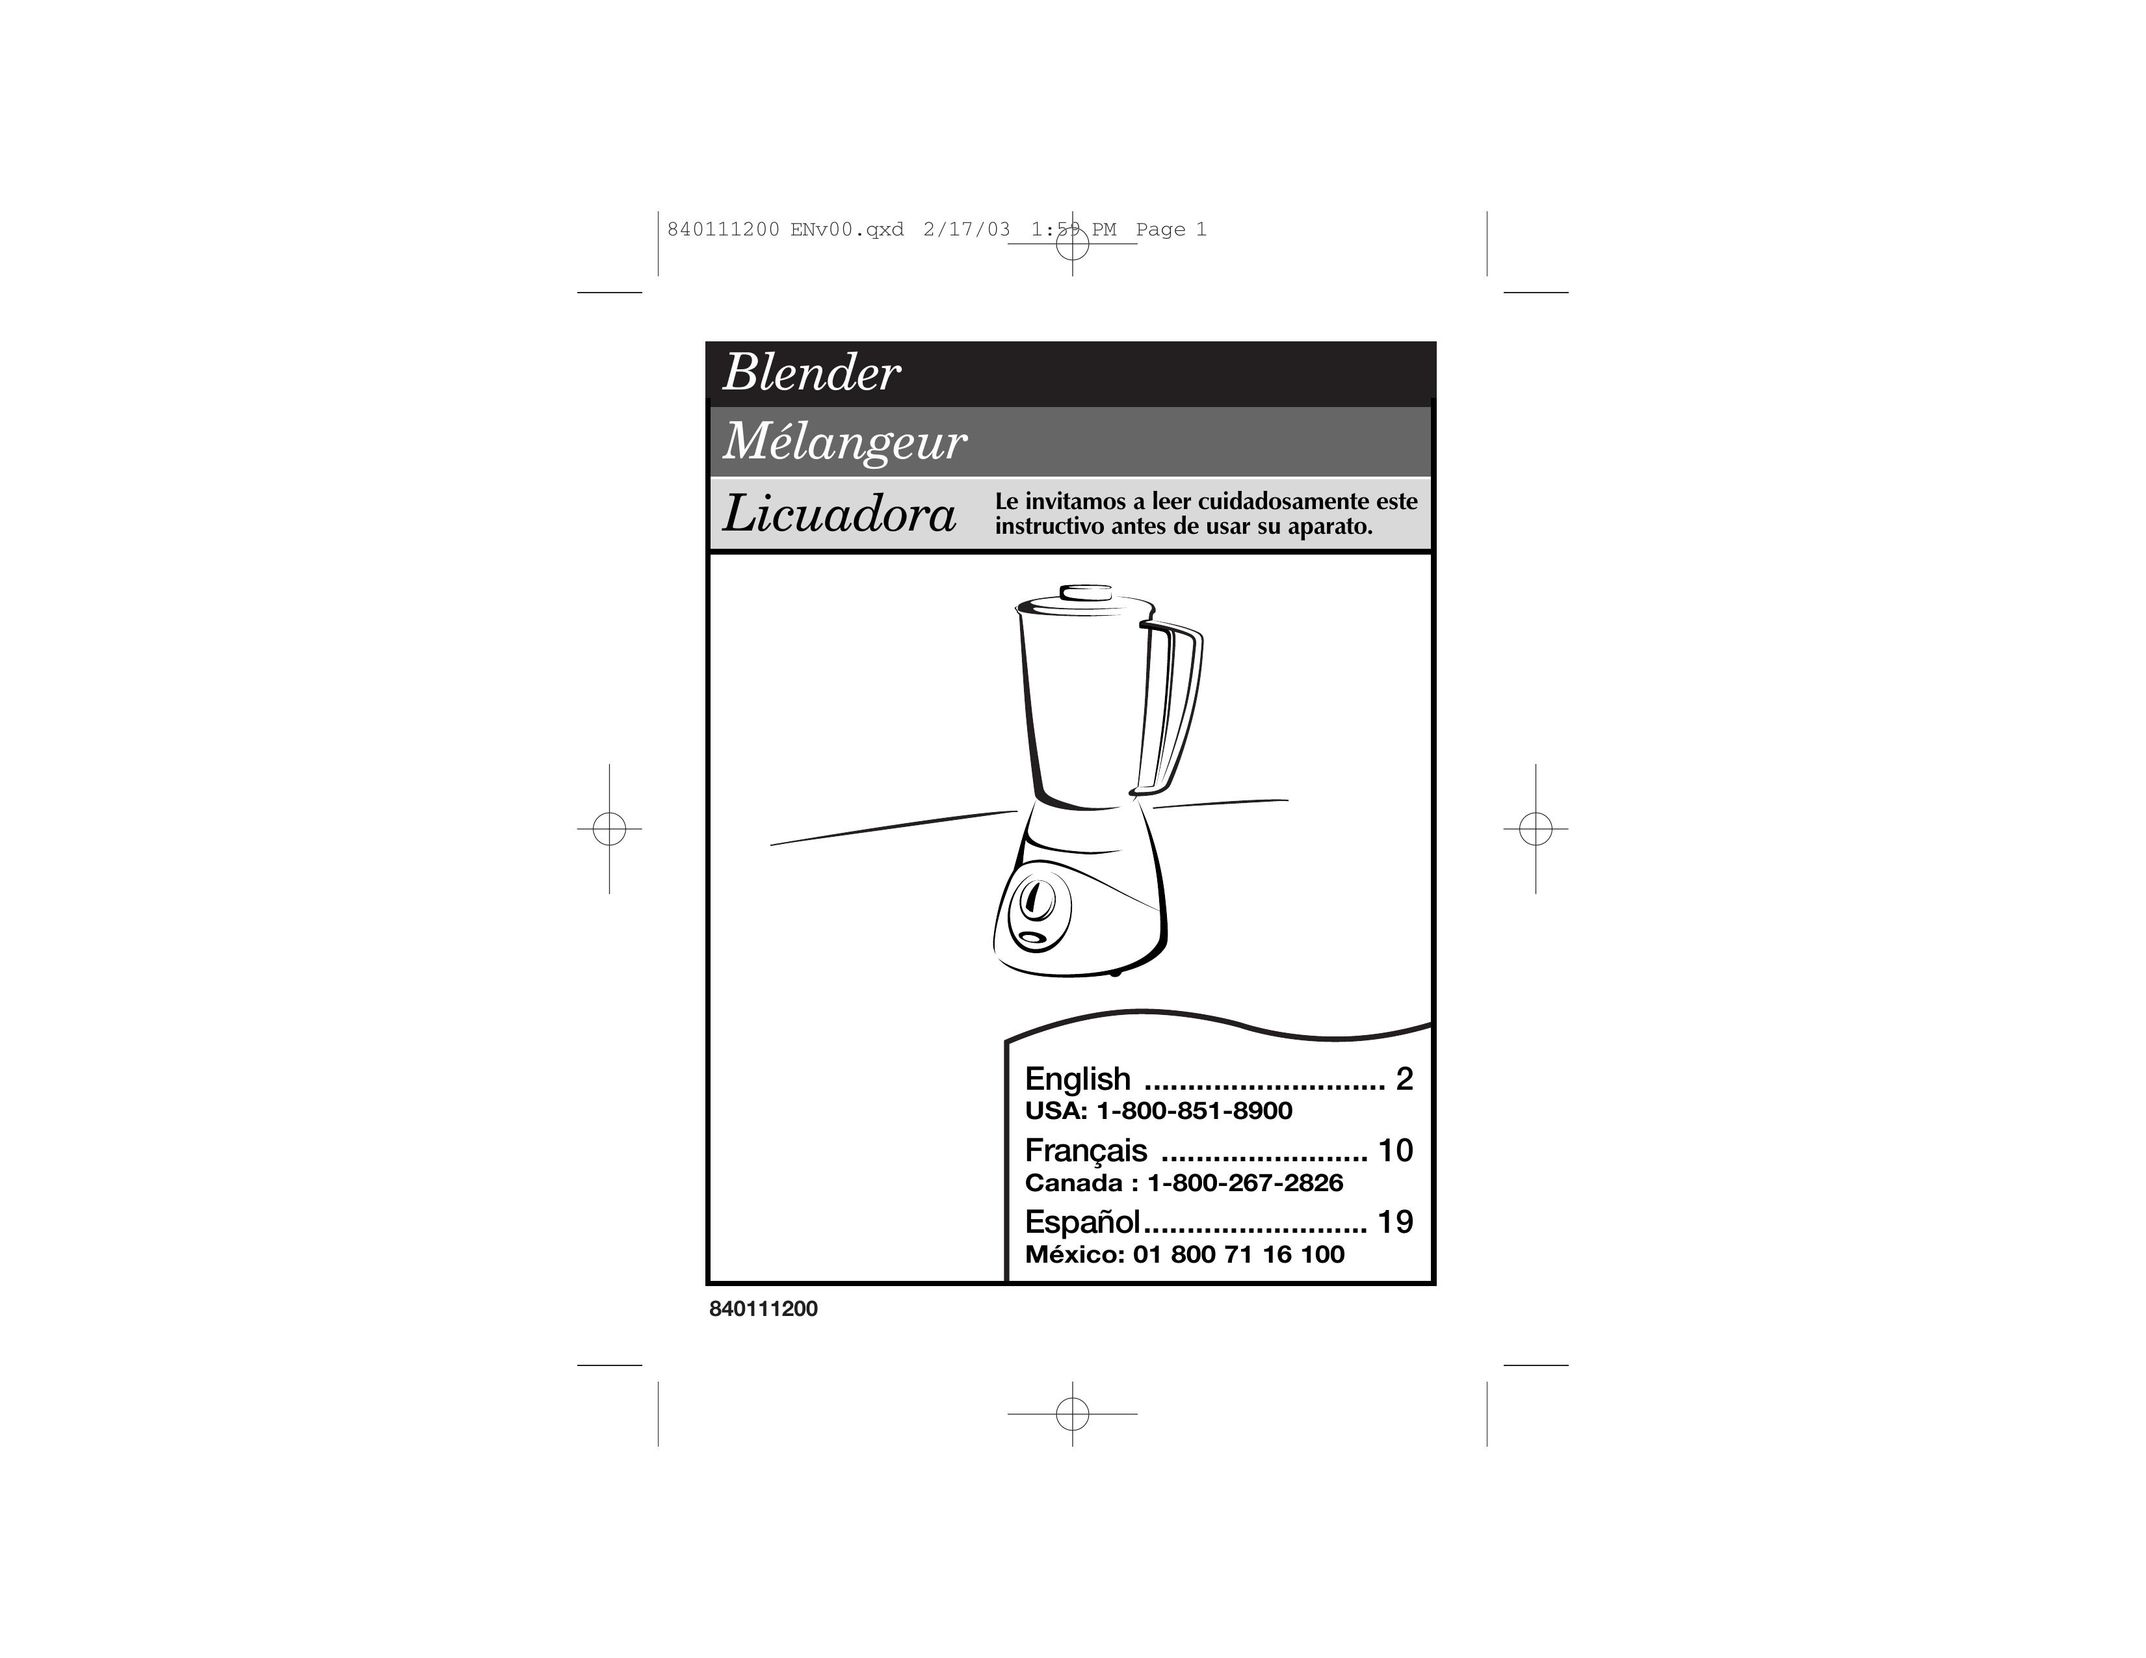 Hamilton Beach 840111200 Blender User Manual